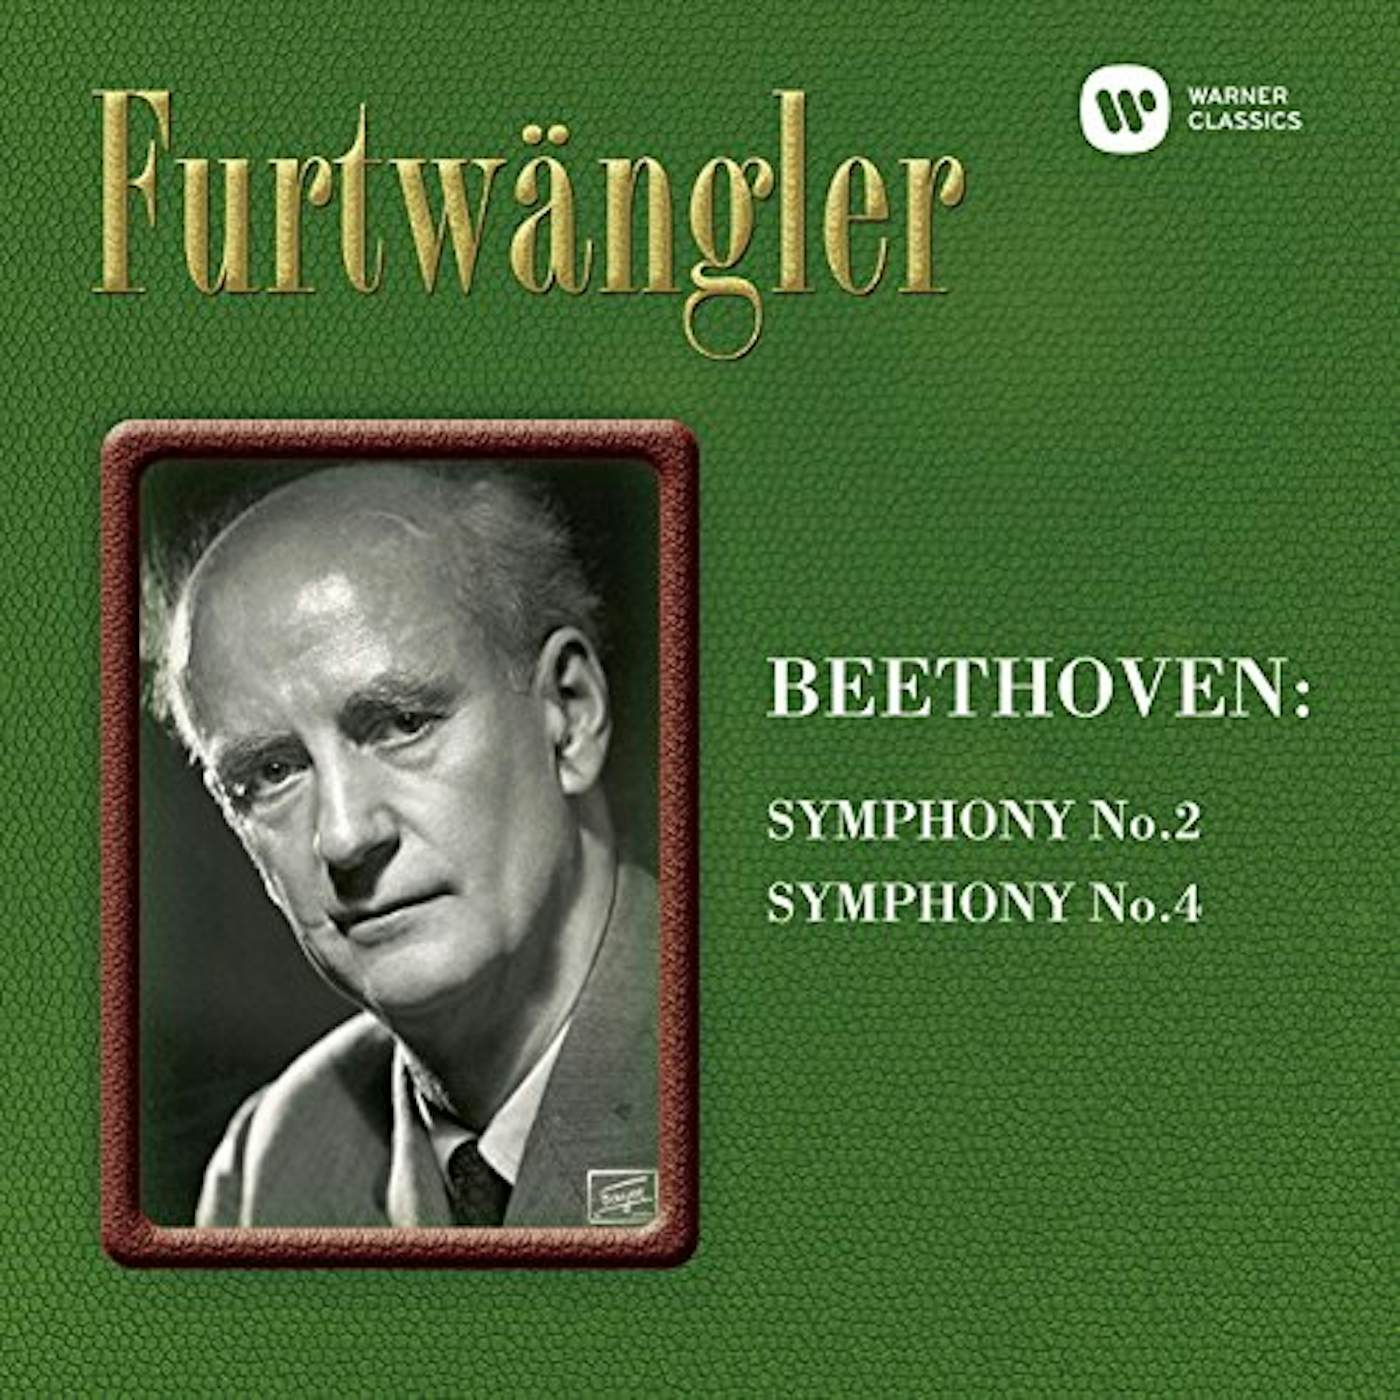 Wilhelm Furtwängler BEETHOVEN: SYMPHONY NO.2 & 4 Super Audio CD